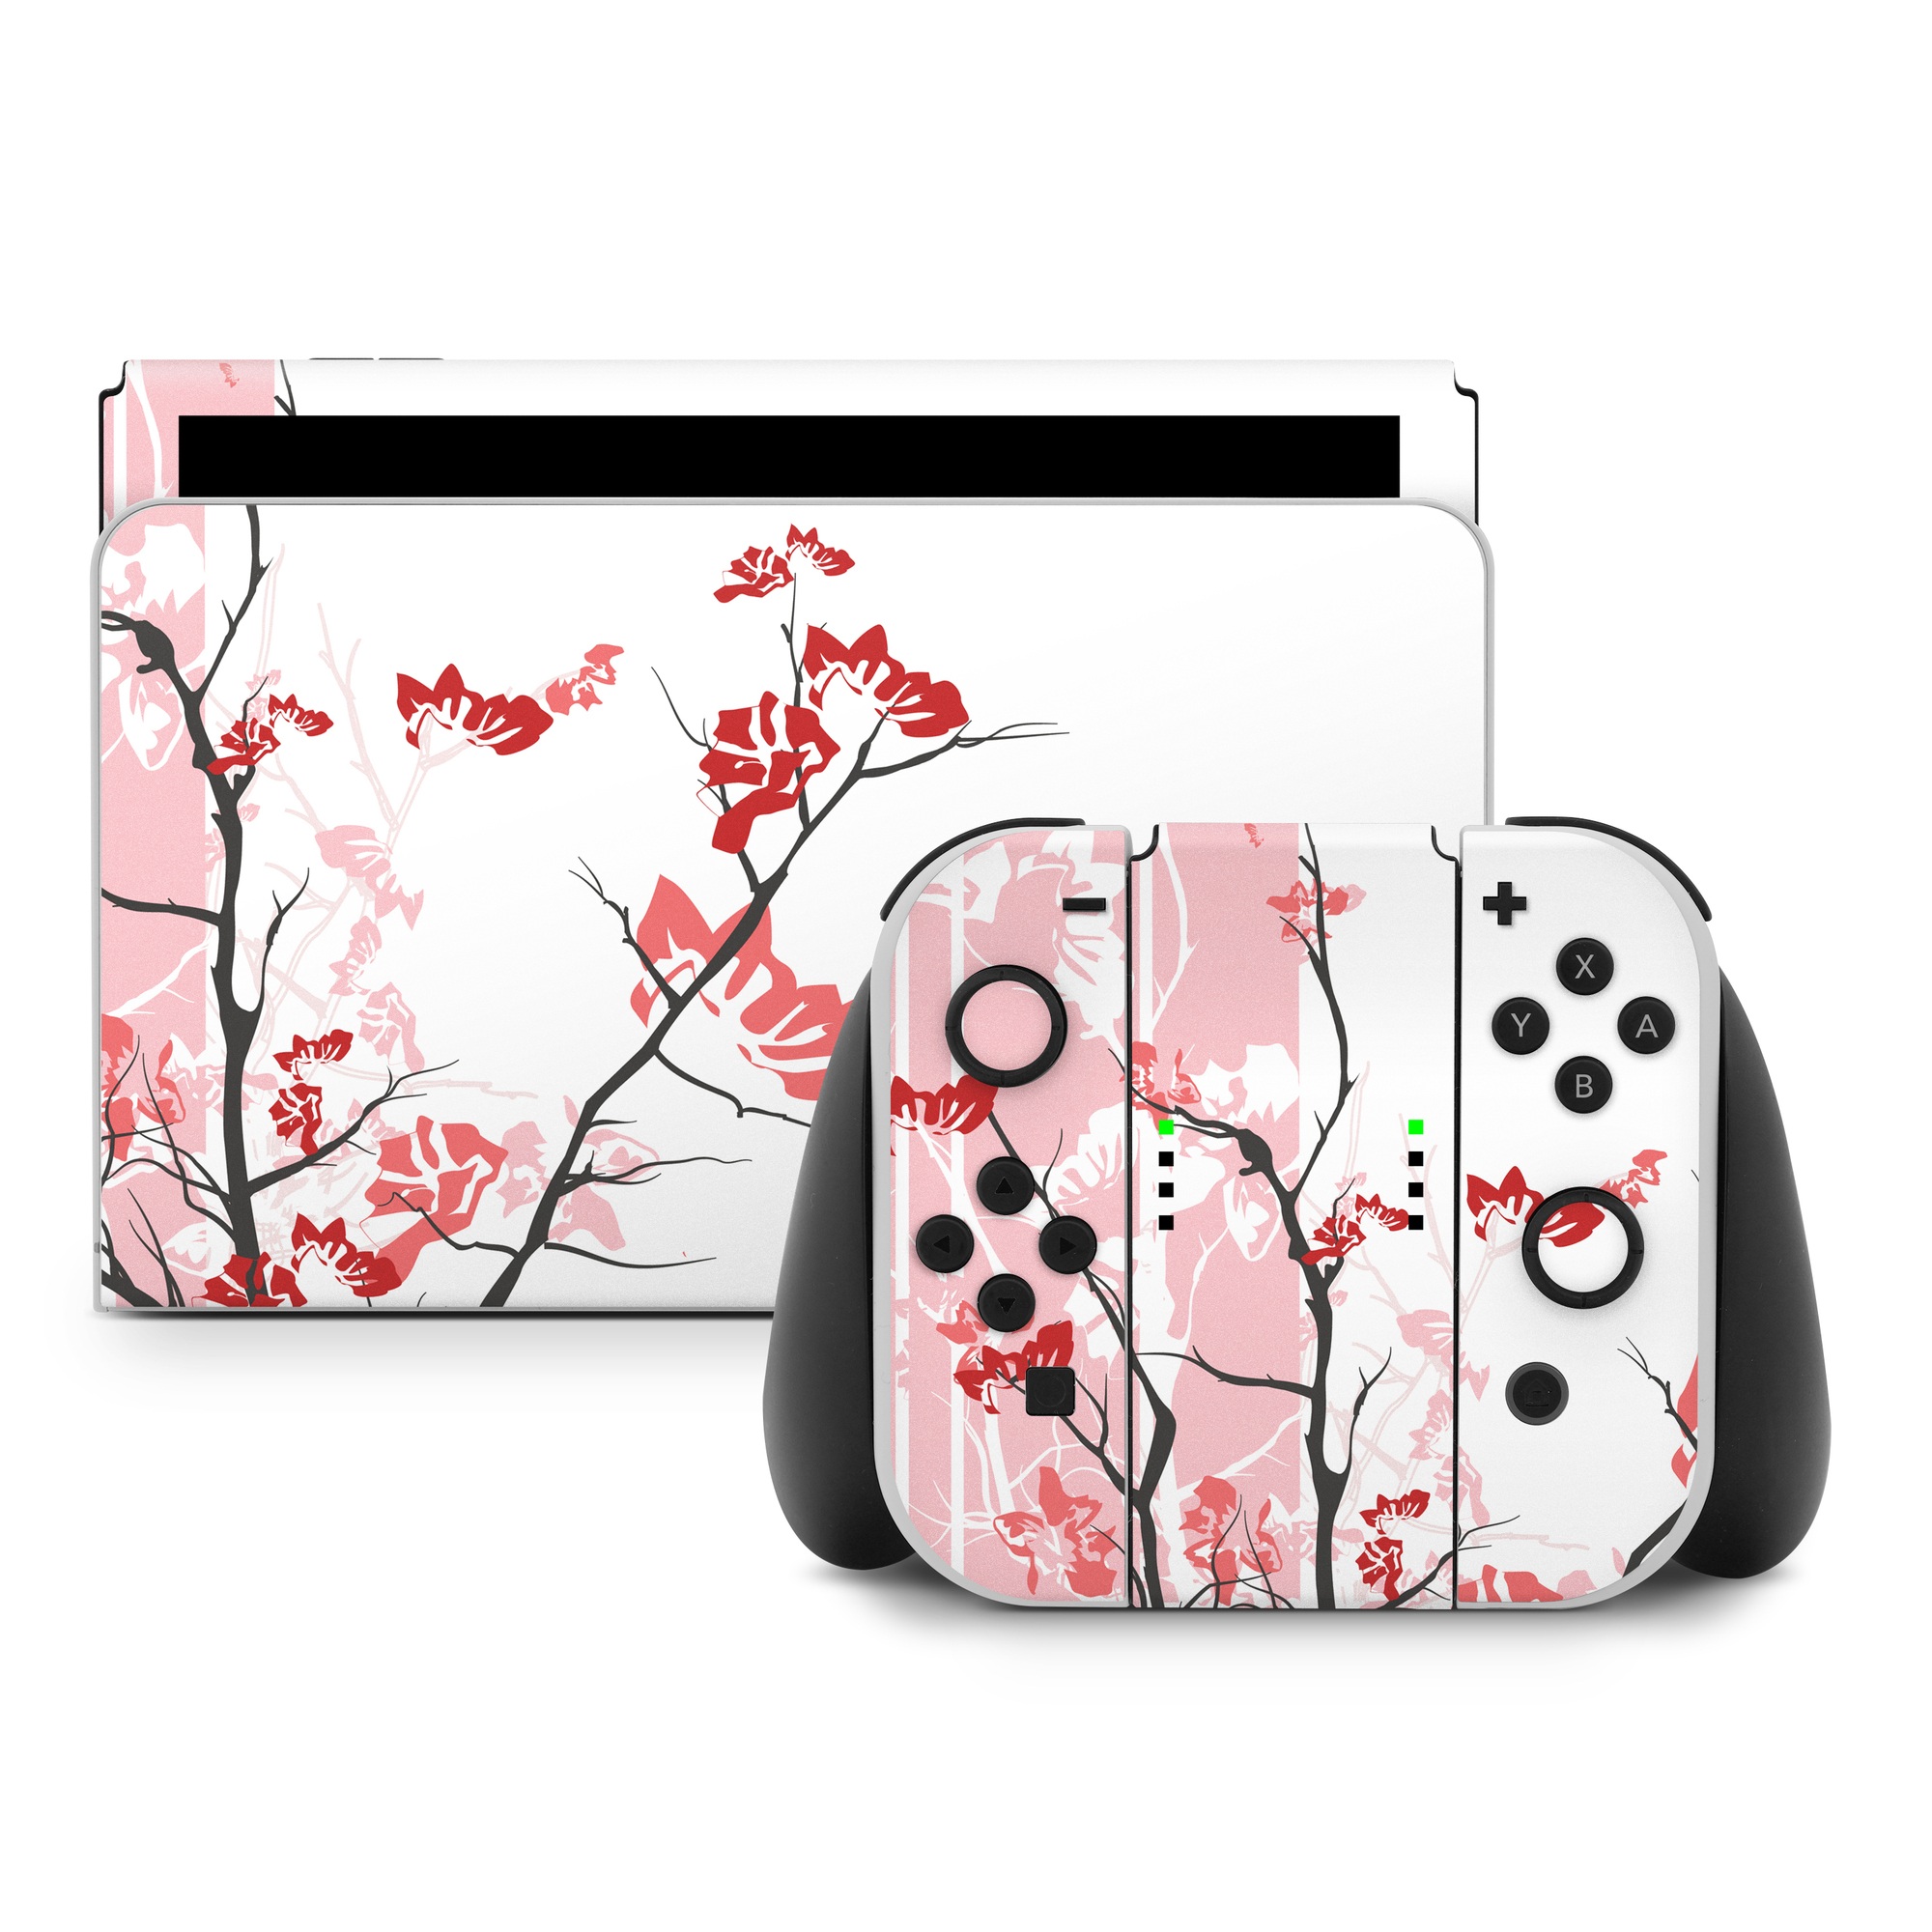 Nintendo Switch Skin - Pink Tranquility (Image 1)